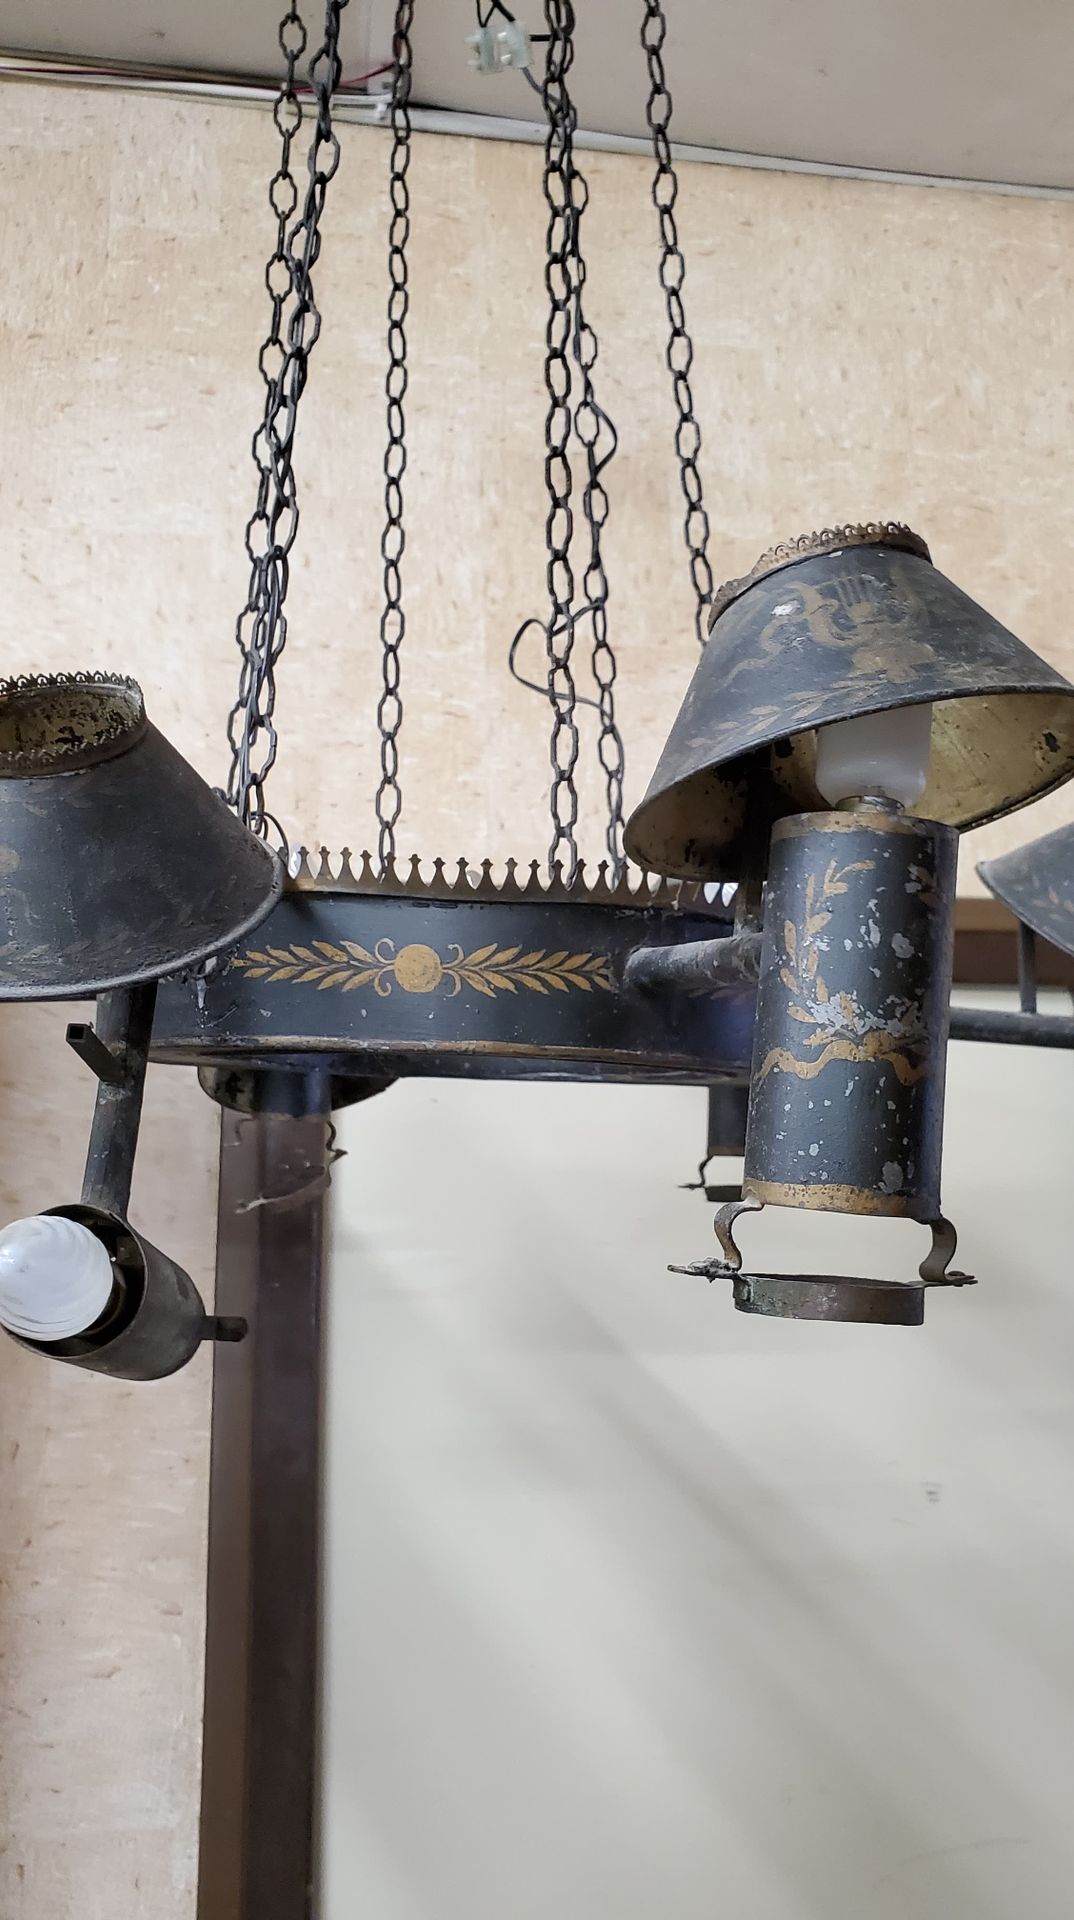 Null 一盏发黑和镀金的六臂吊灯，带有灯罩。

帝国时期

高度85厘米，直径65厘米

(事故)